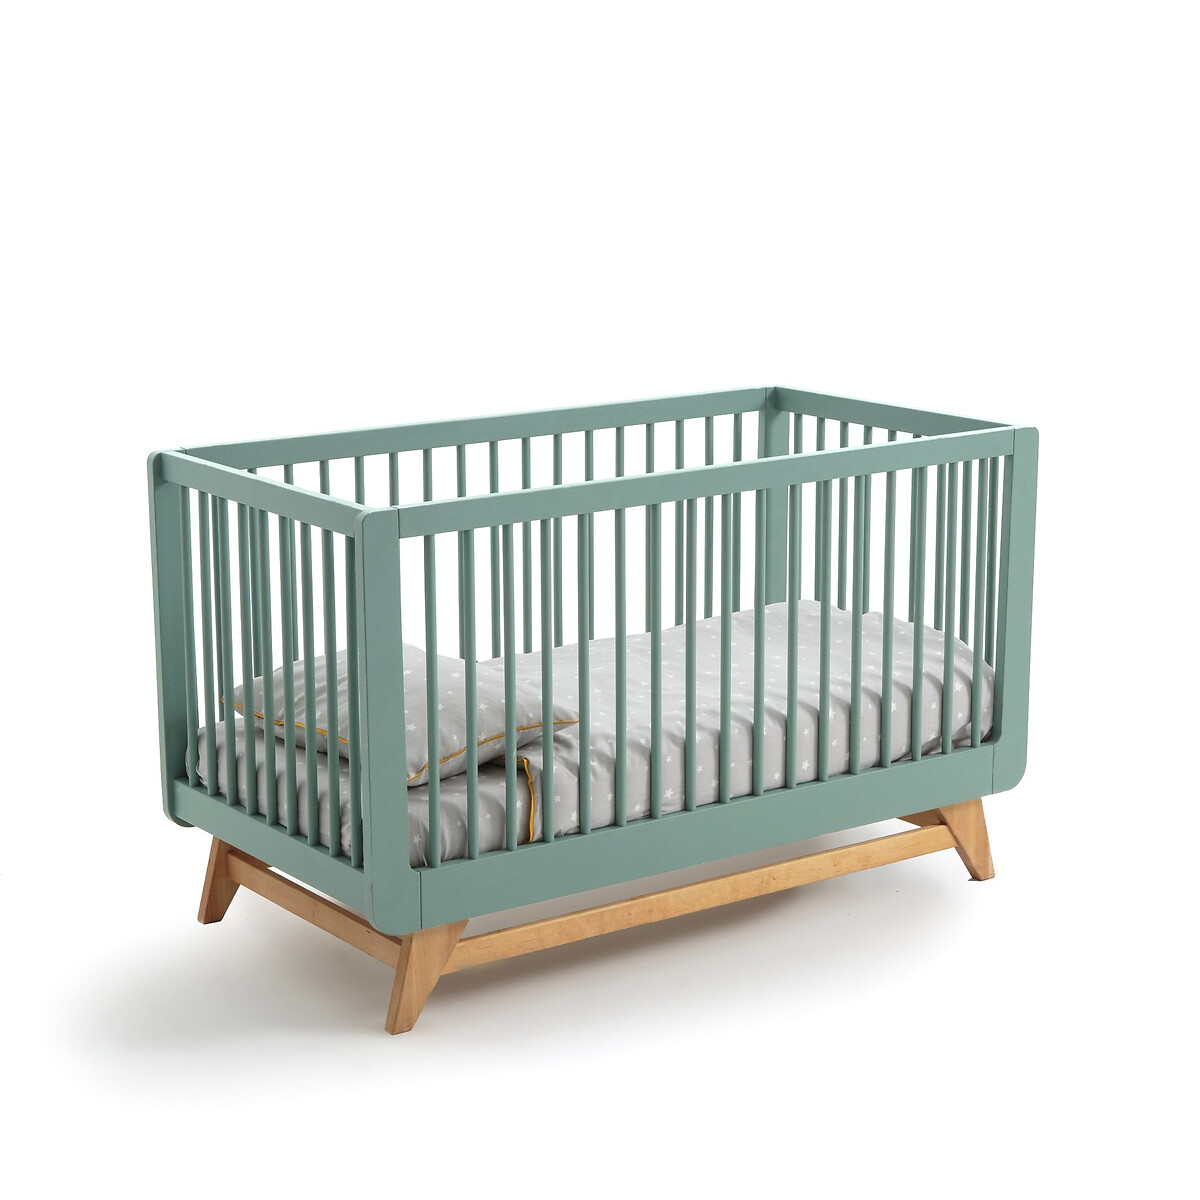 Willox Adjustable Wooden Cot Bed